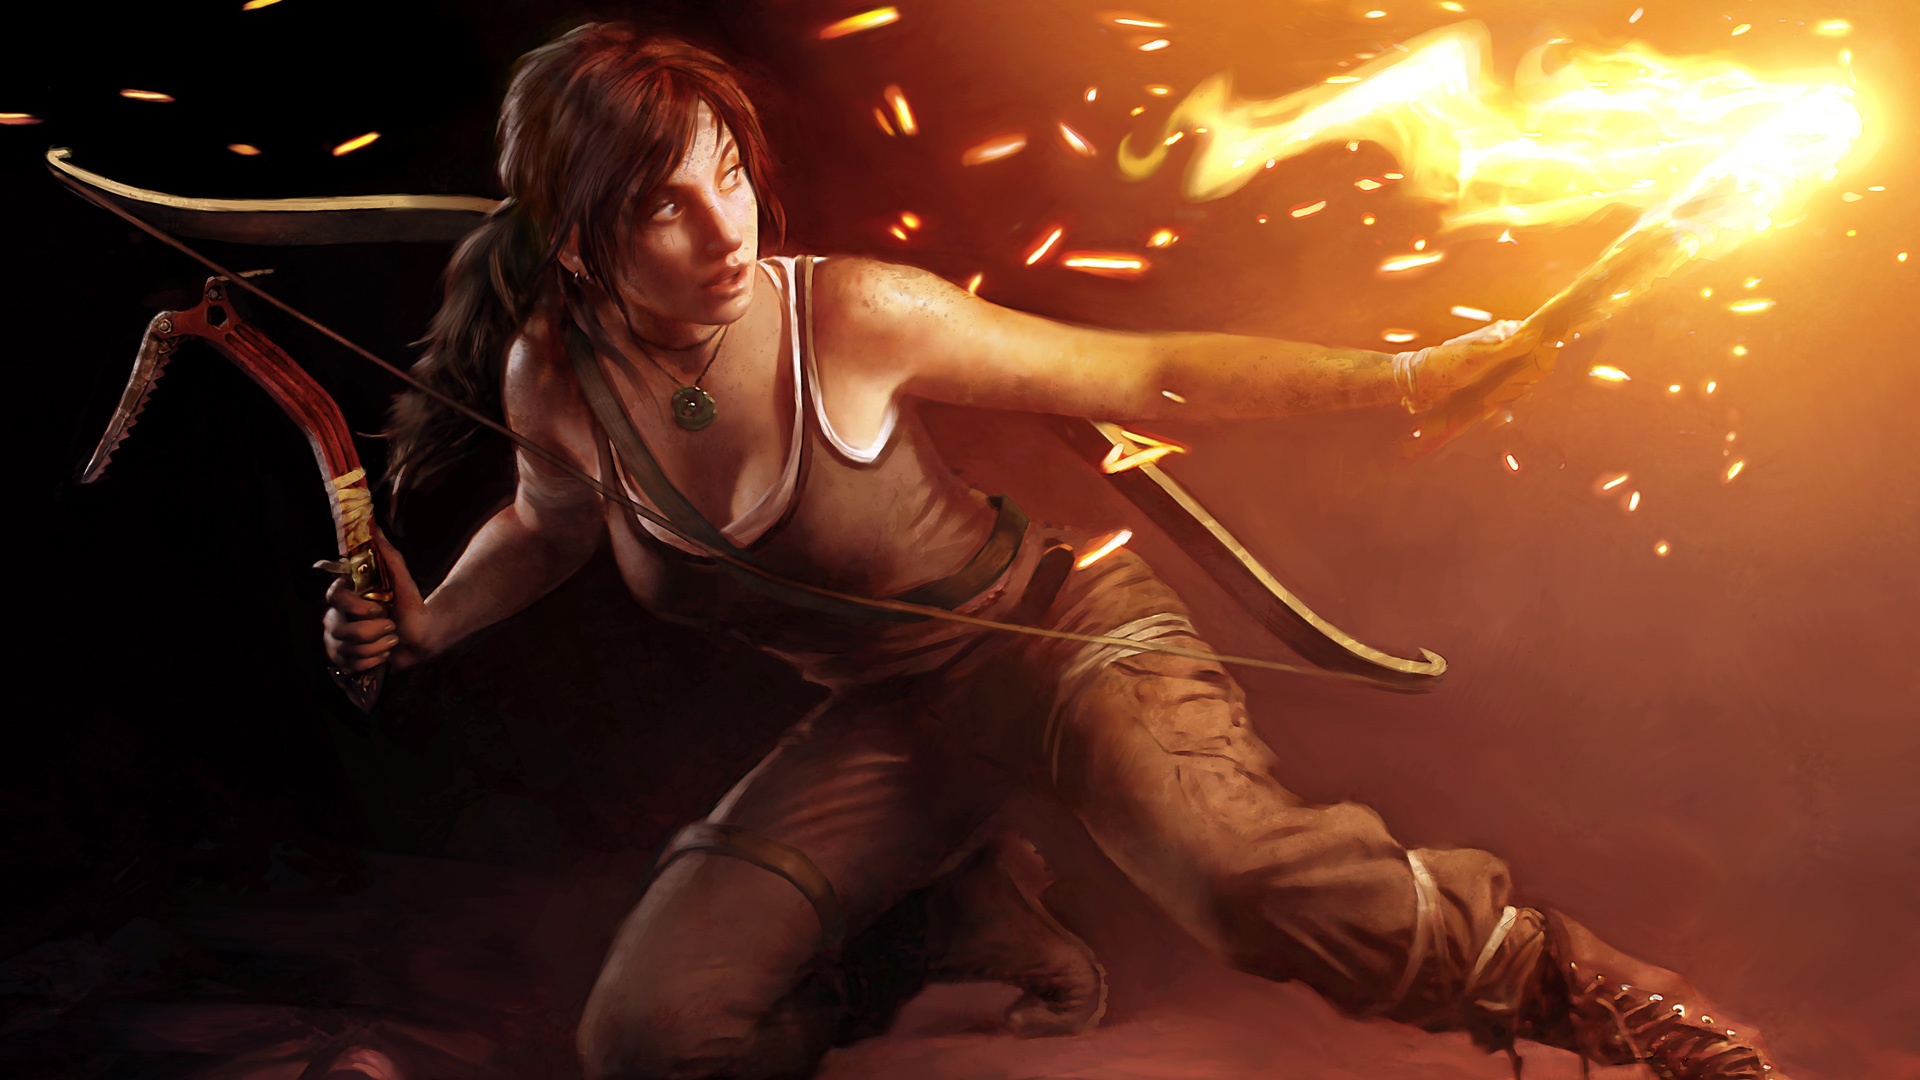 Lara Croft Tomb Raider 2013 HD Wallpapers ImageBankbiz